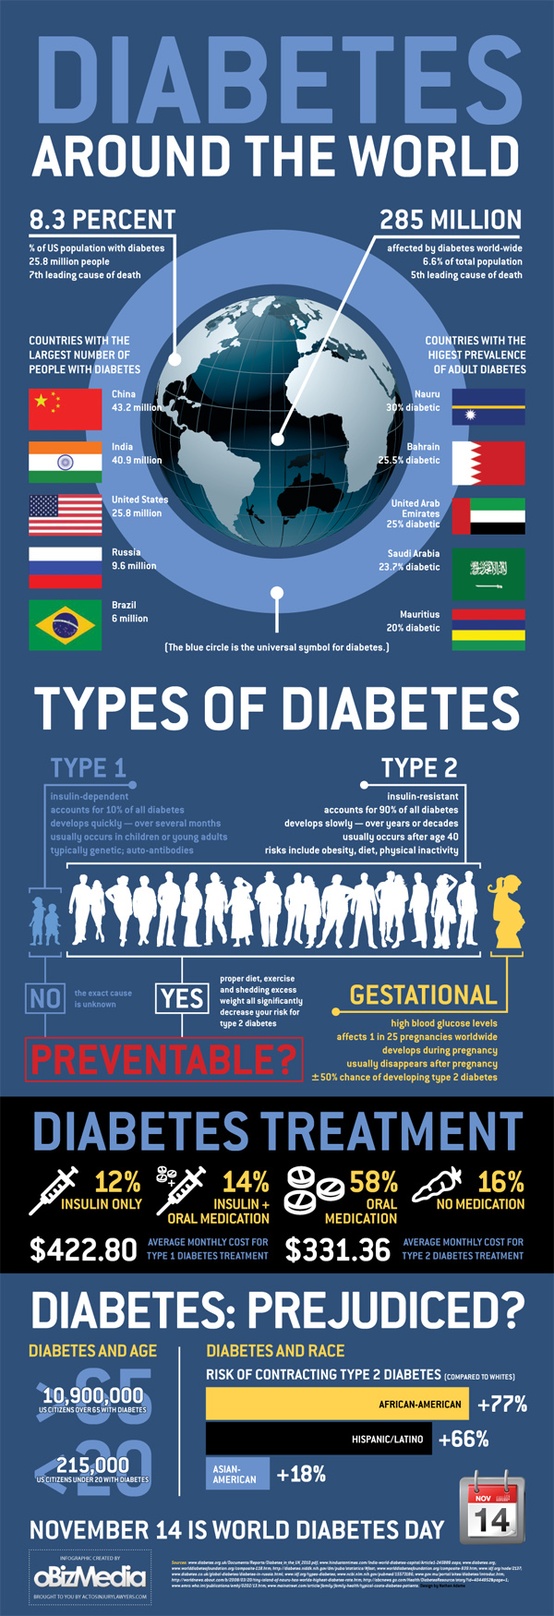 Statistics on Diabetes around the World